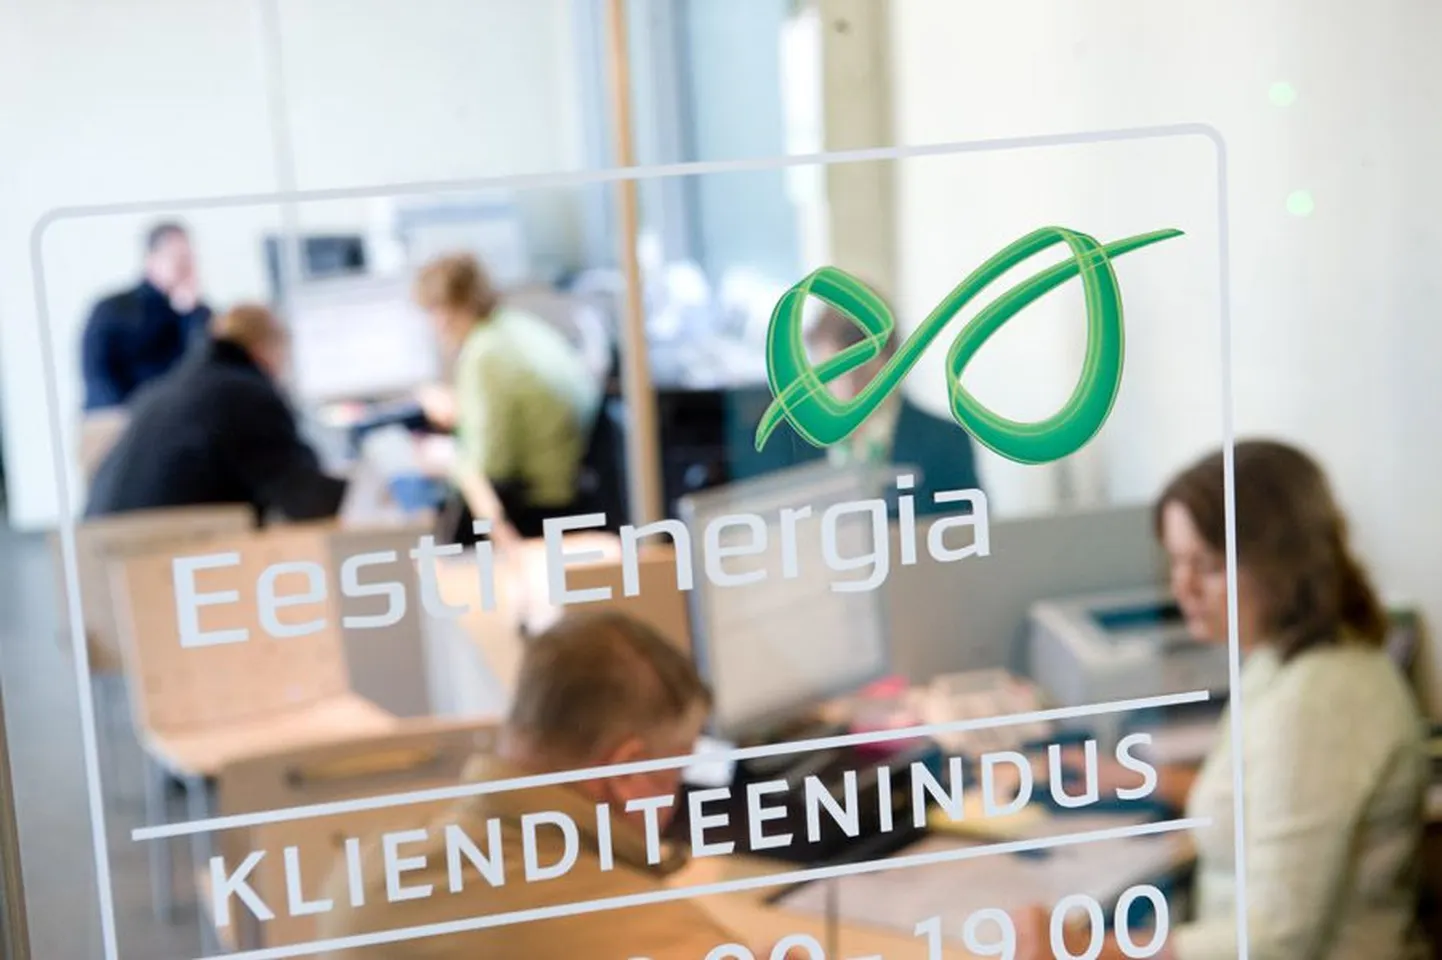 Eesti Energia.